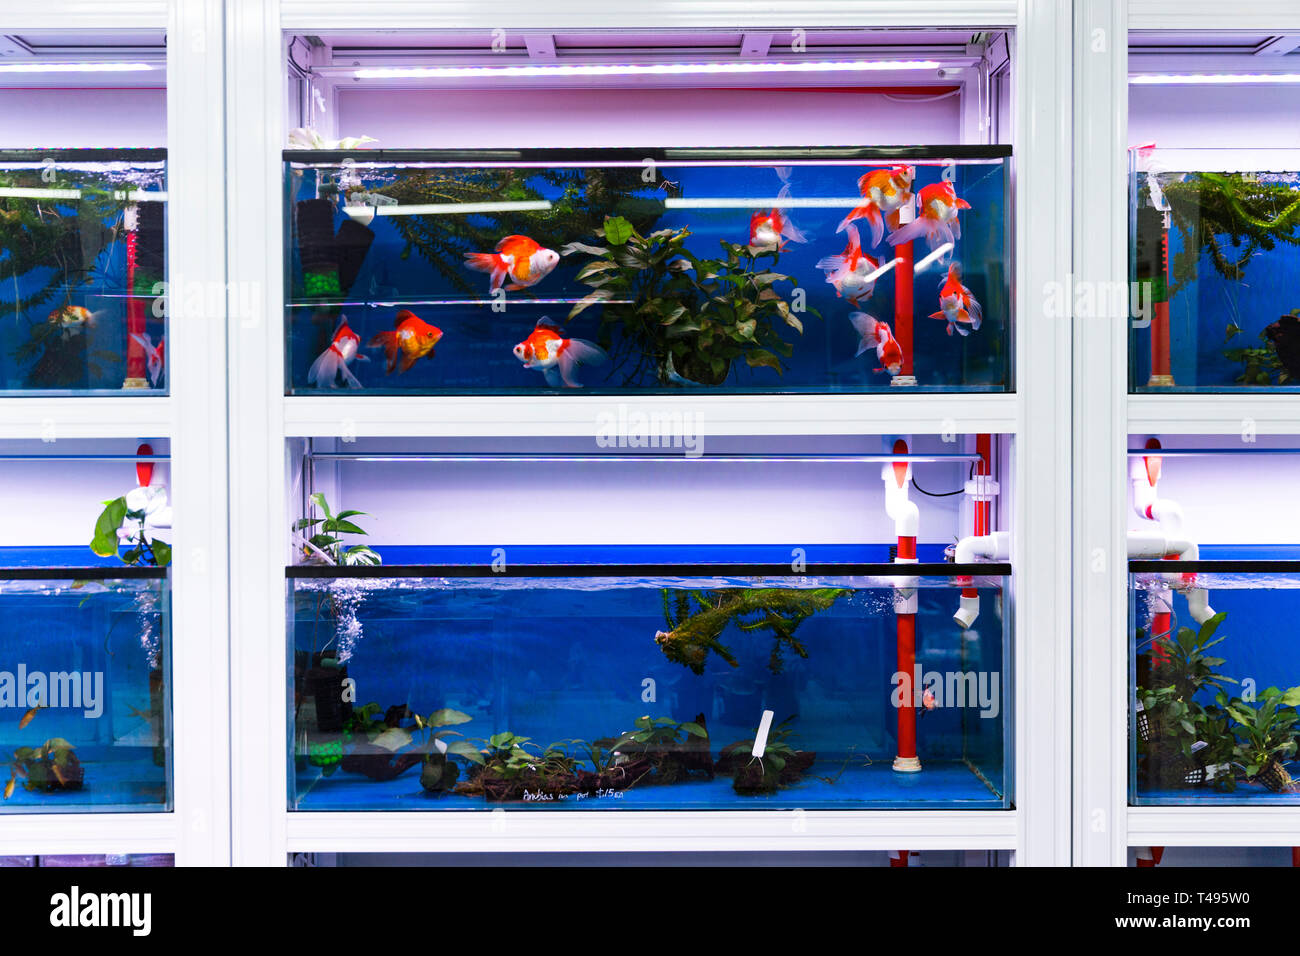 New Ryukin fish tank recently installed in aquarium retail space. Stock Photo